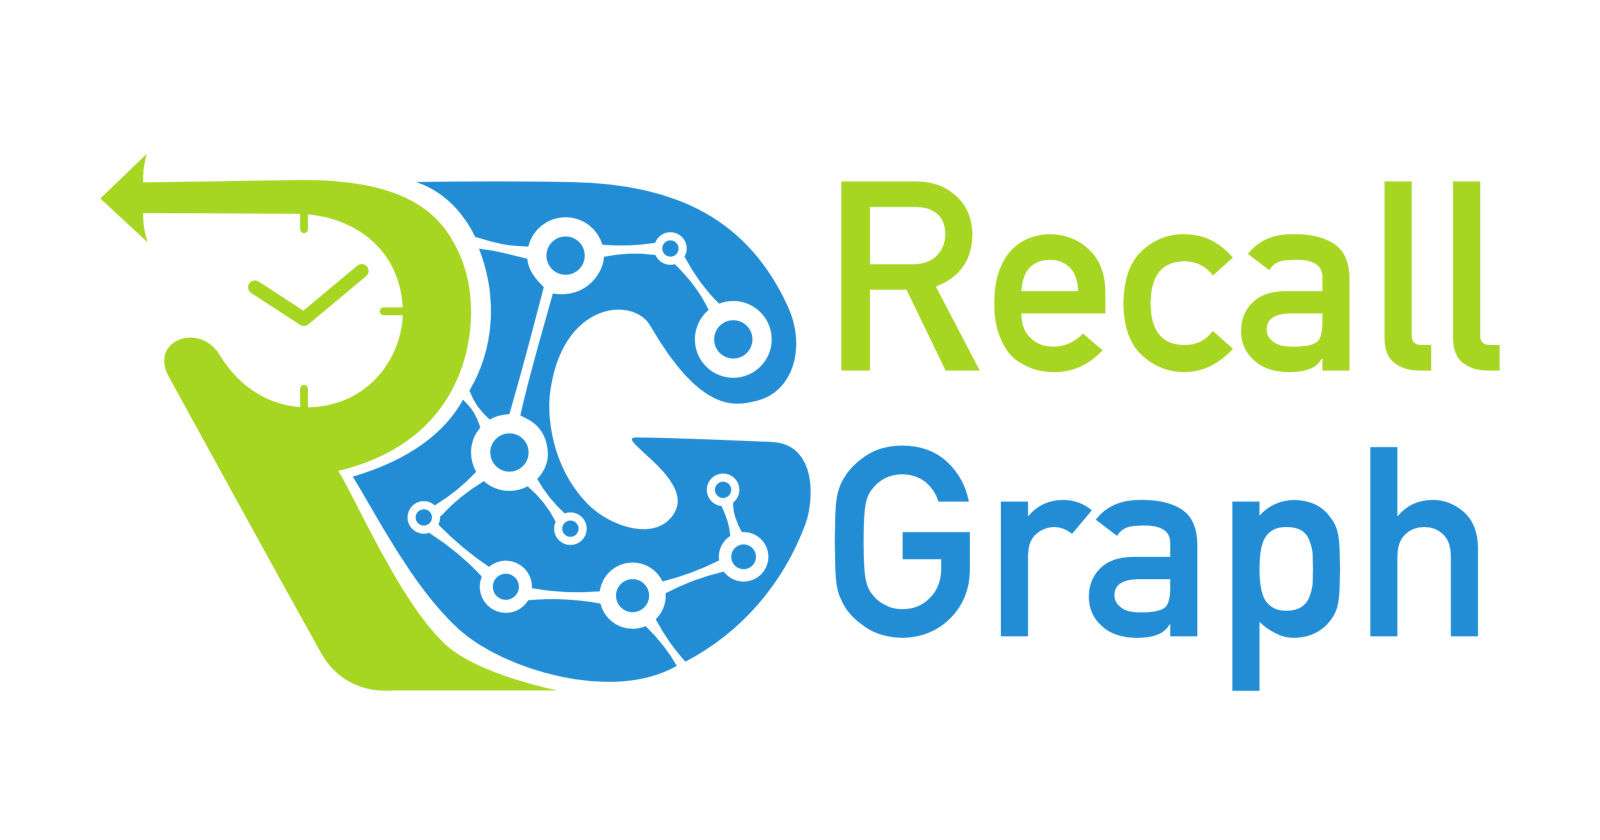 RecallGraph v1 Released